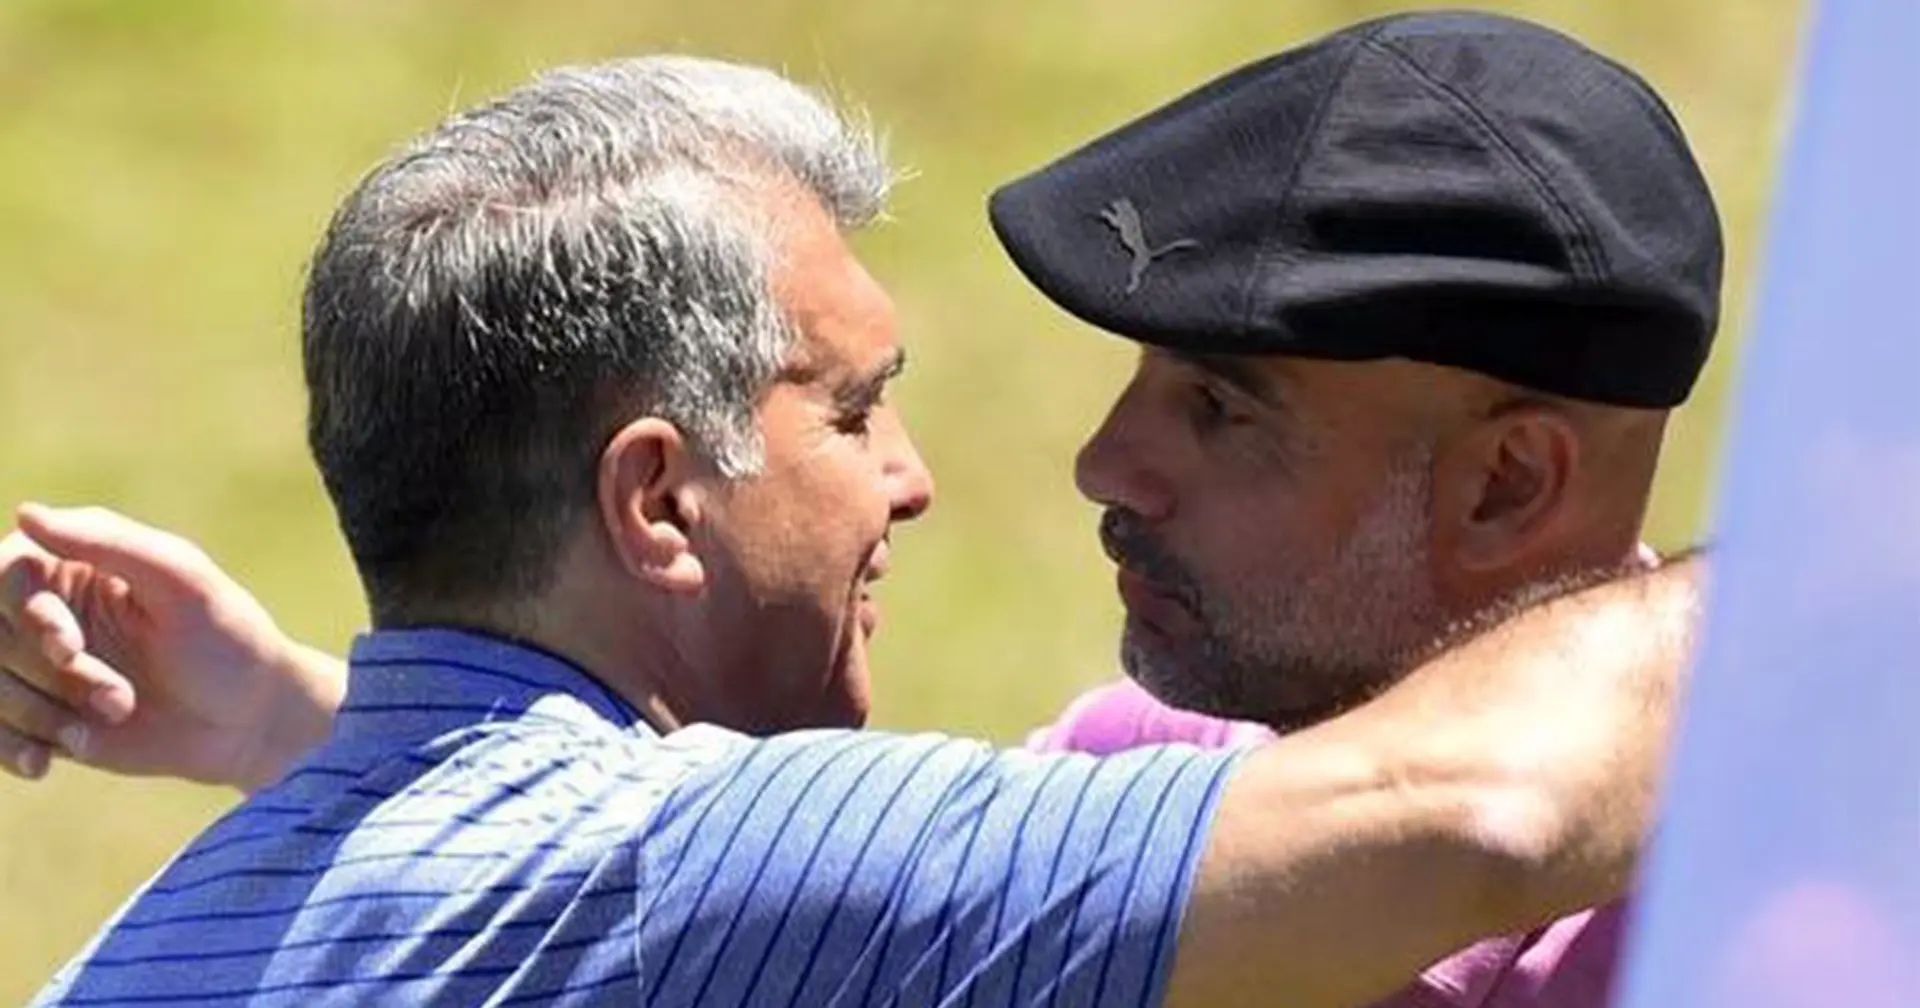 Laporta meets Guardiola to play golf together, Koeman not present